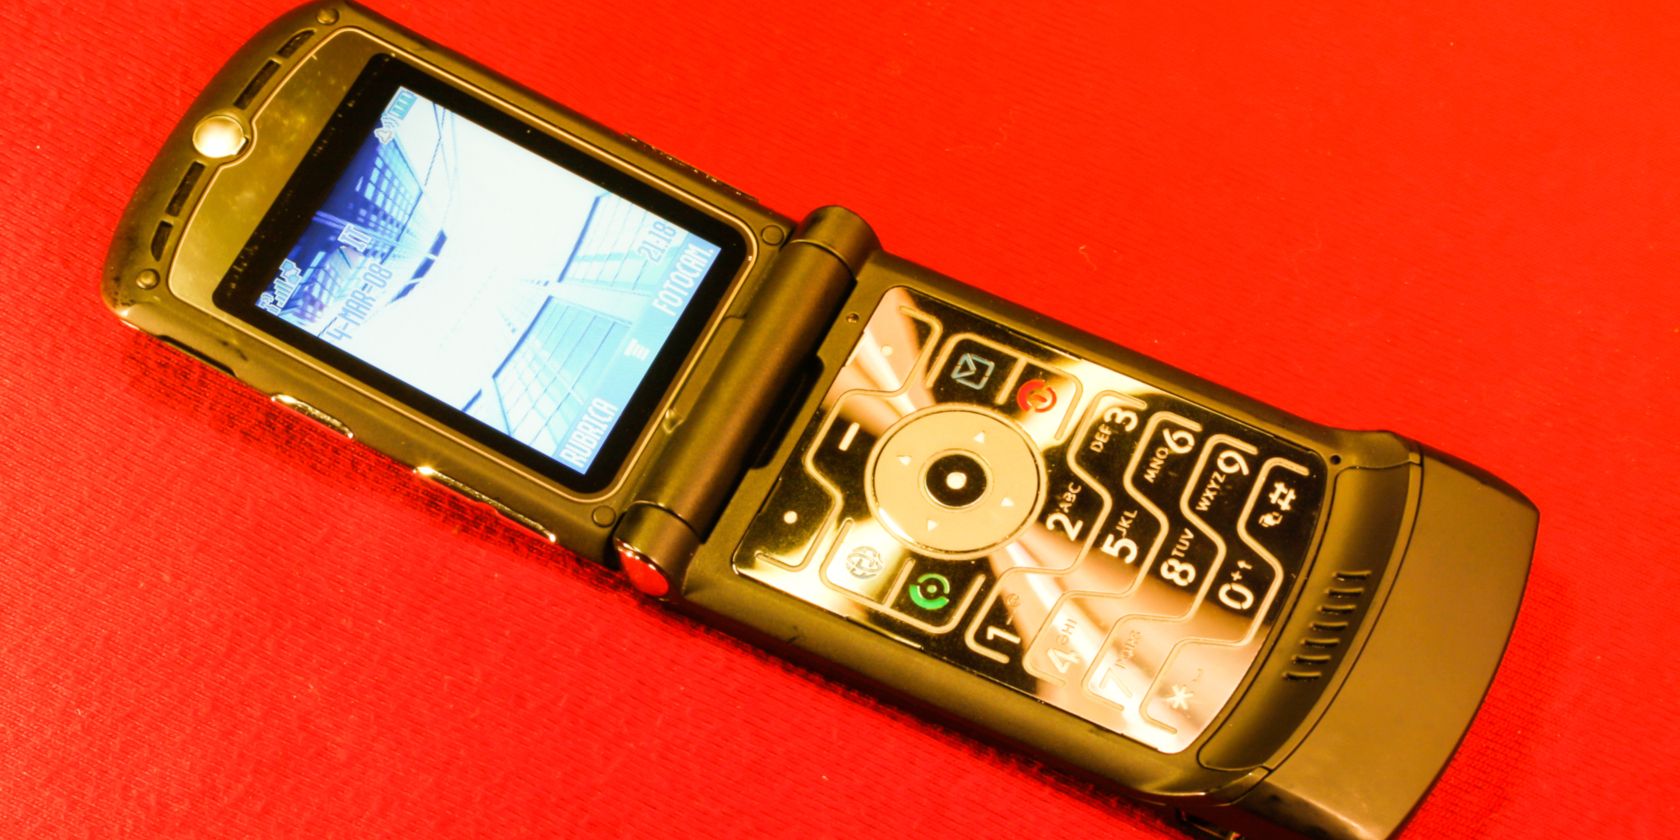 A motorola Razr phone on a red background